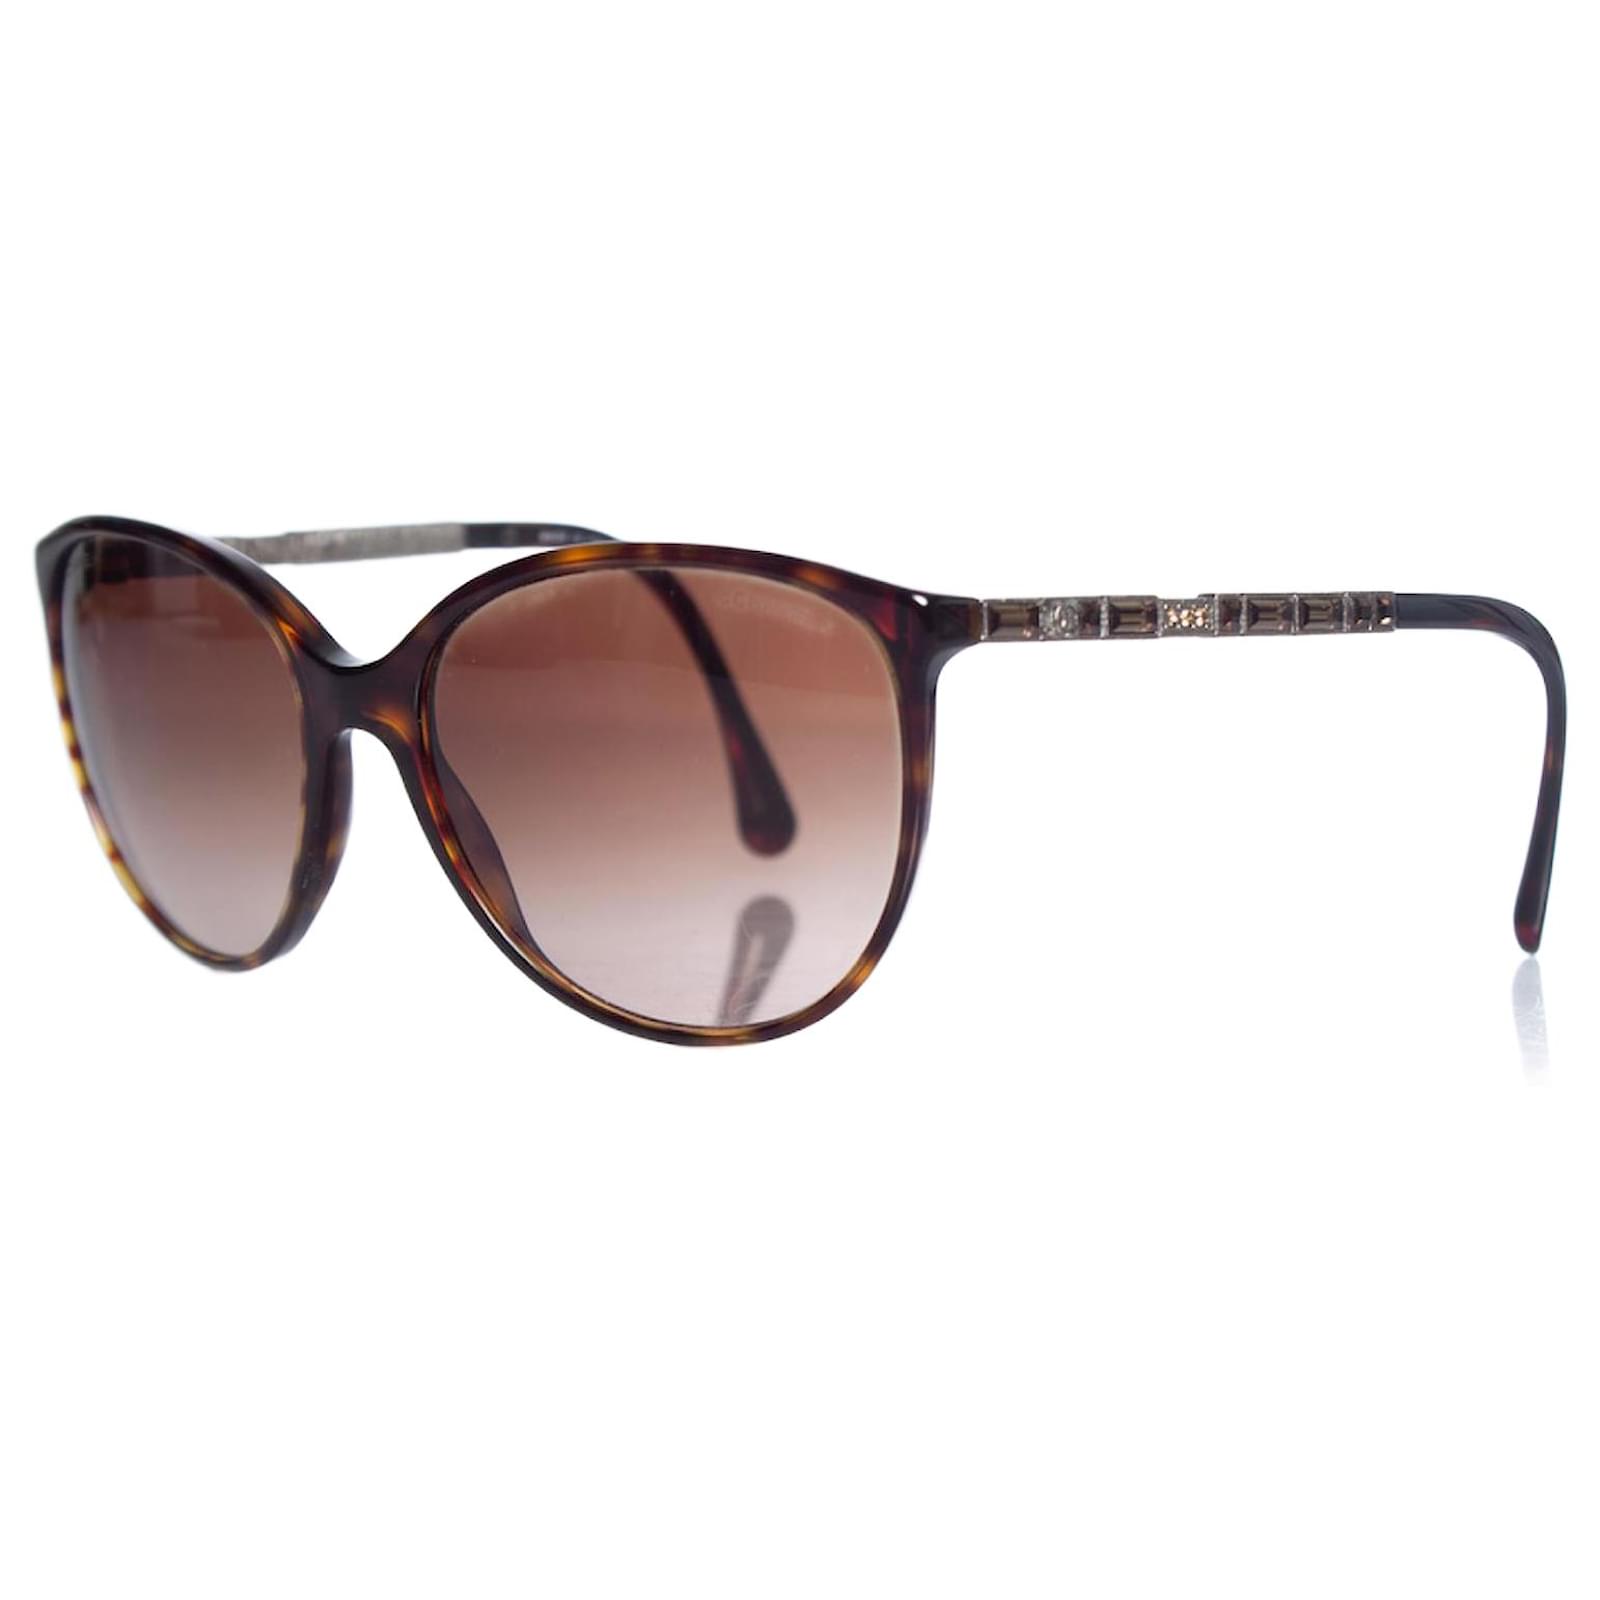 Chanel, brown cat eye sunglasses